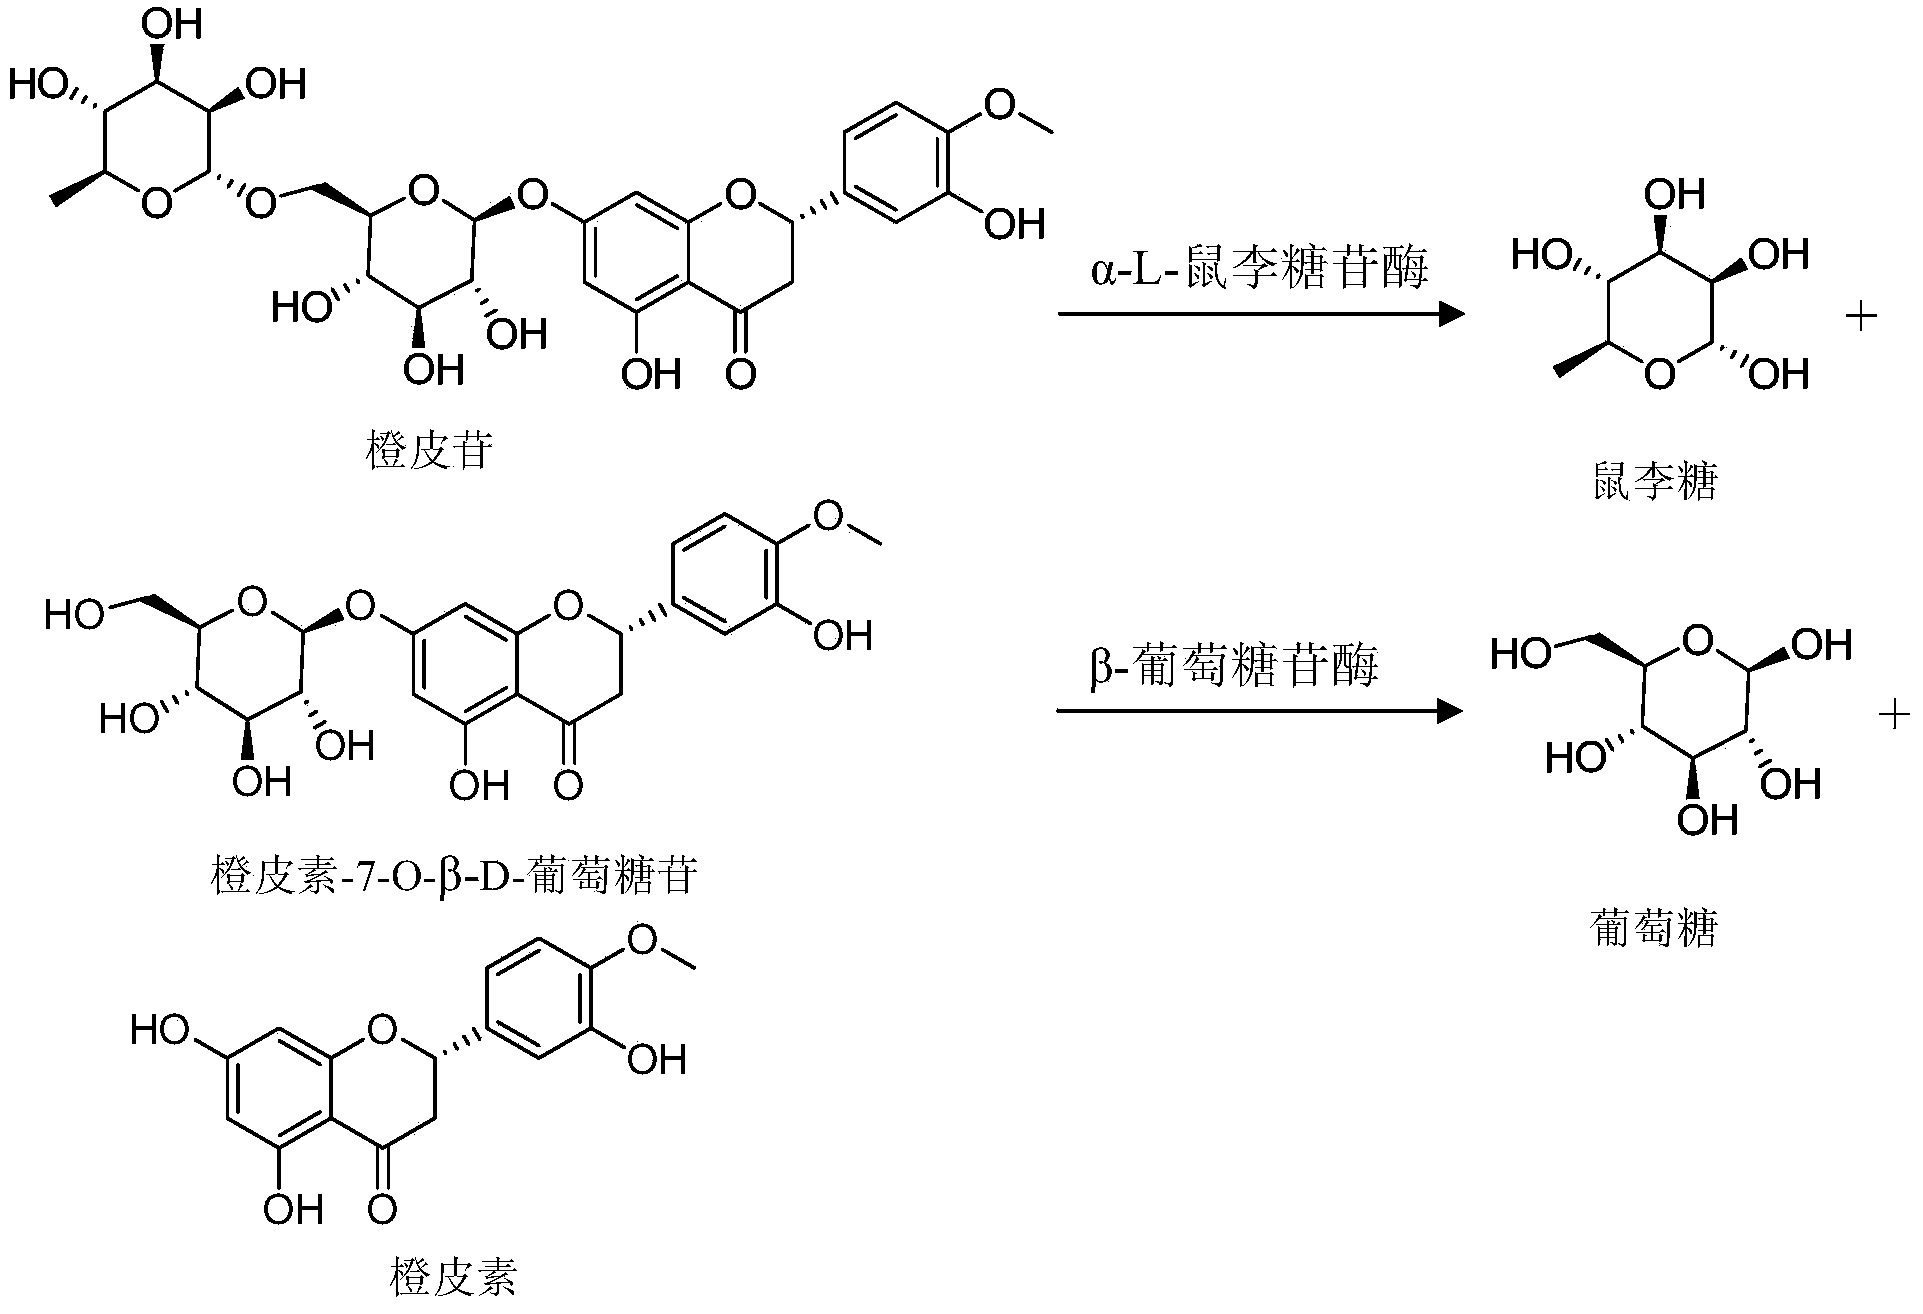 Method for obtaining high-purity hesperetin from valeriana jatamansi residue